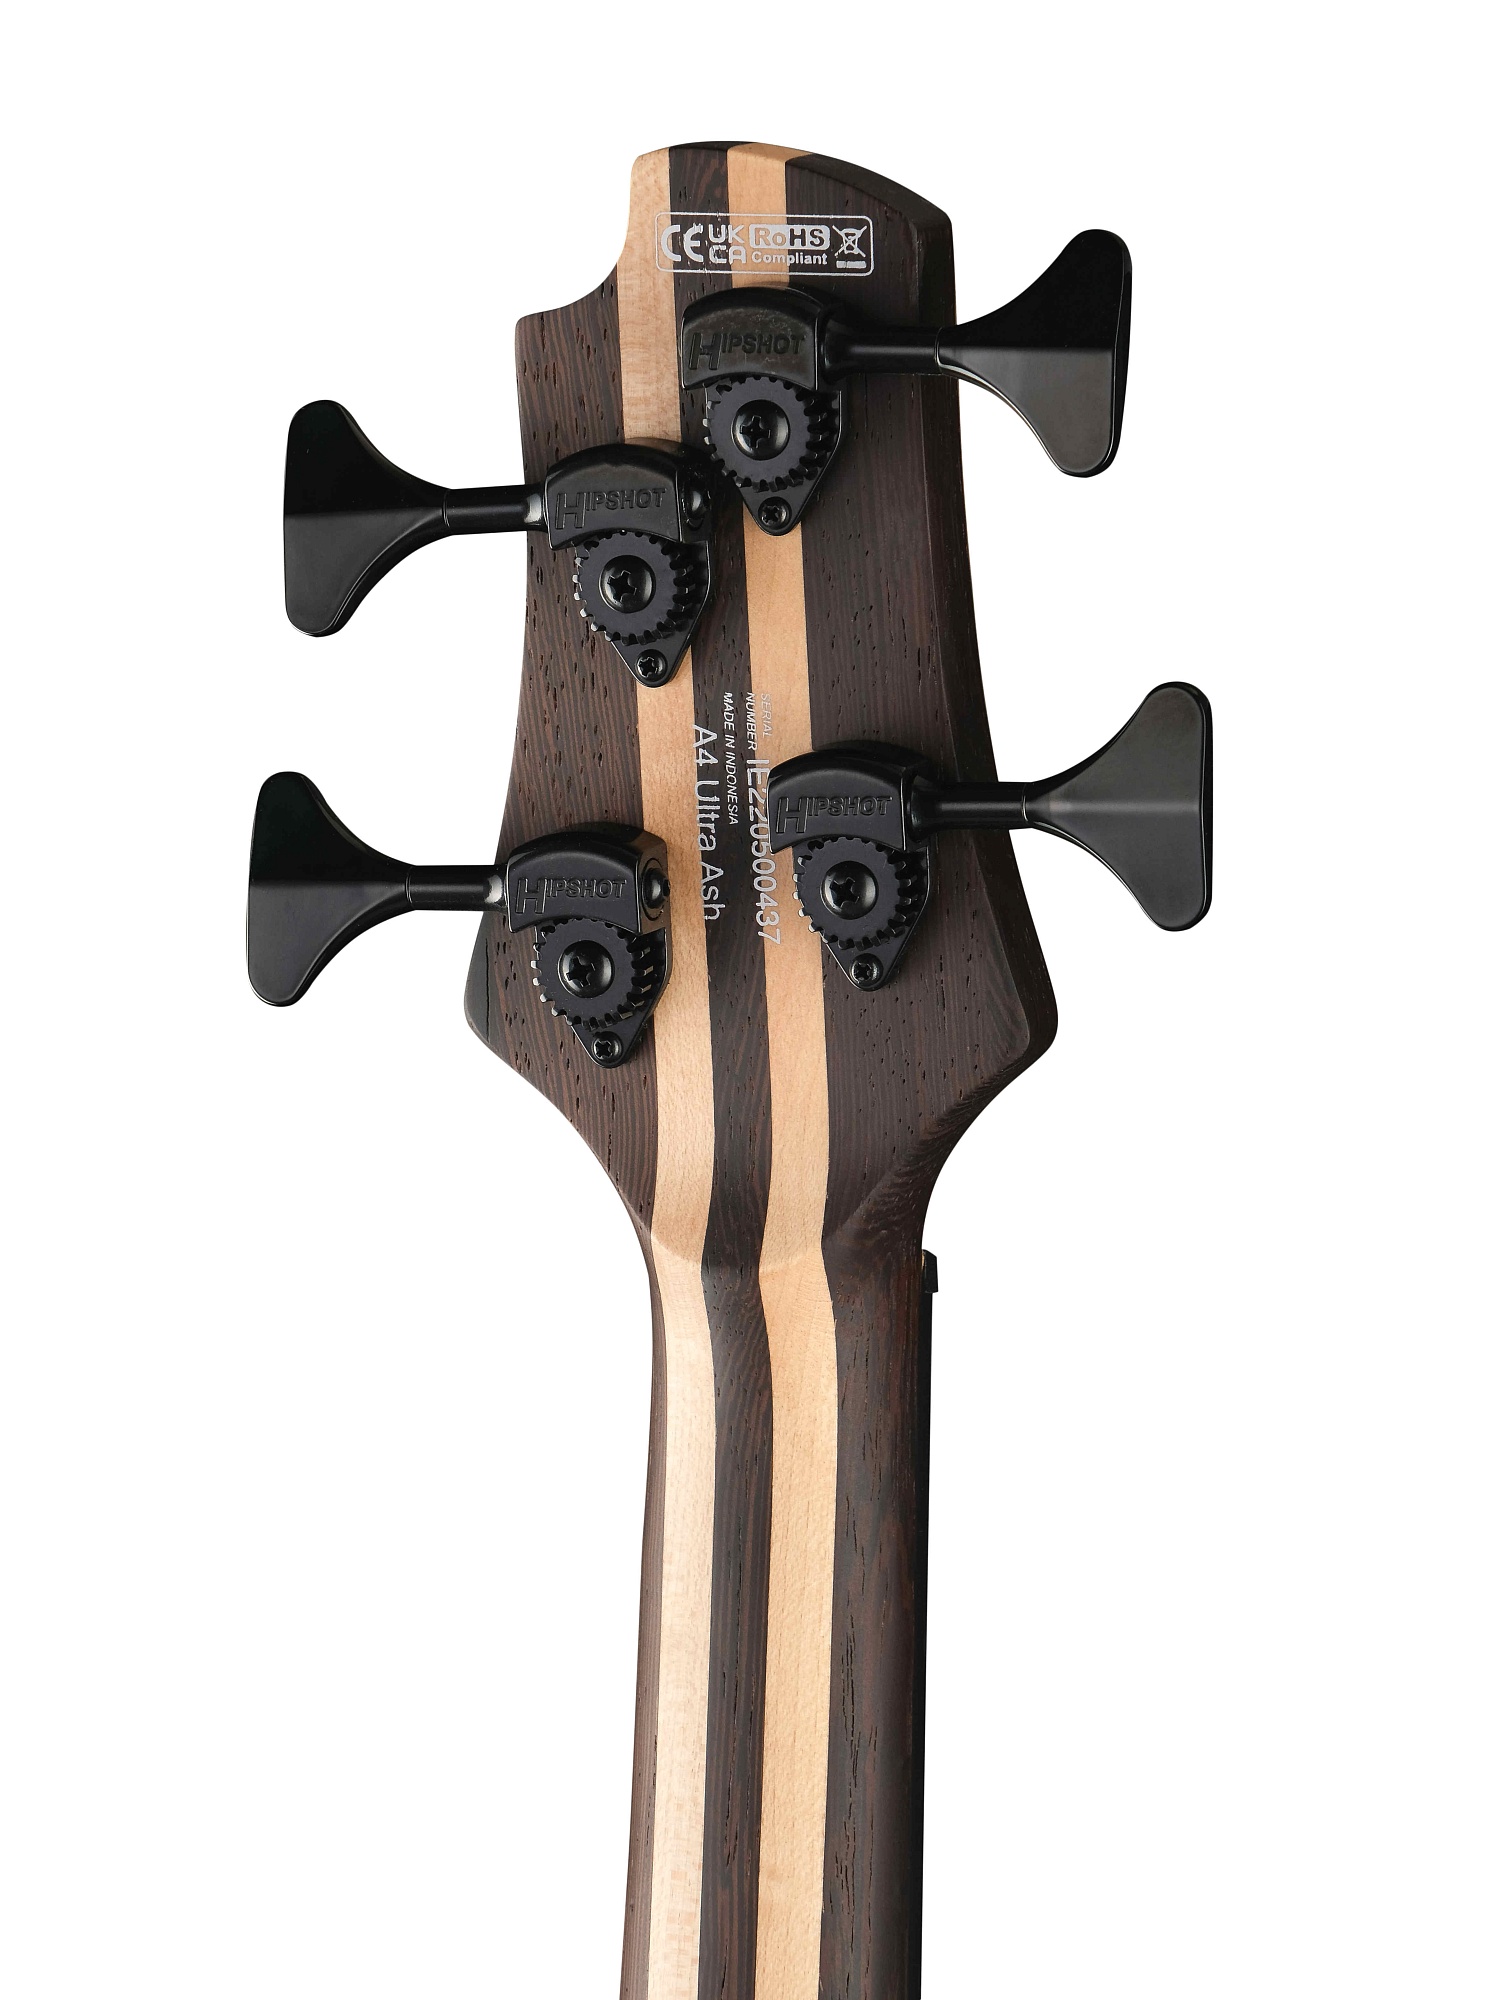 A4-Ultra-Ash-WCASE-ENB Artisan Series Бас-гитара, цвет натуральный, с футляром, Cort купить в prostore.me